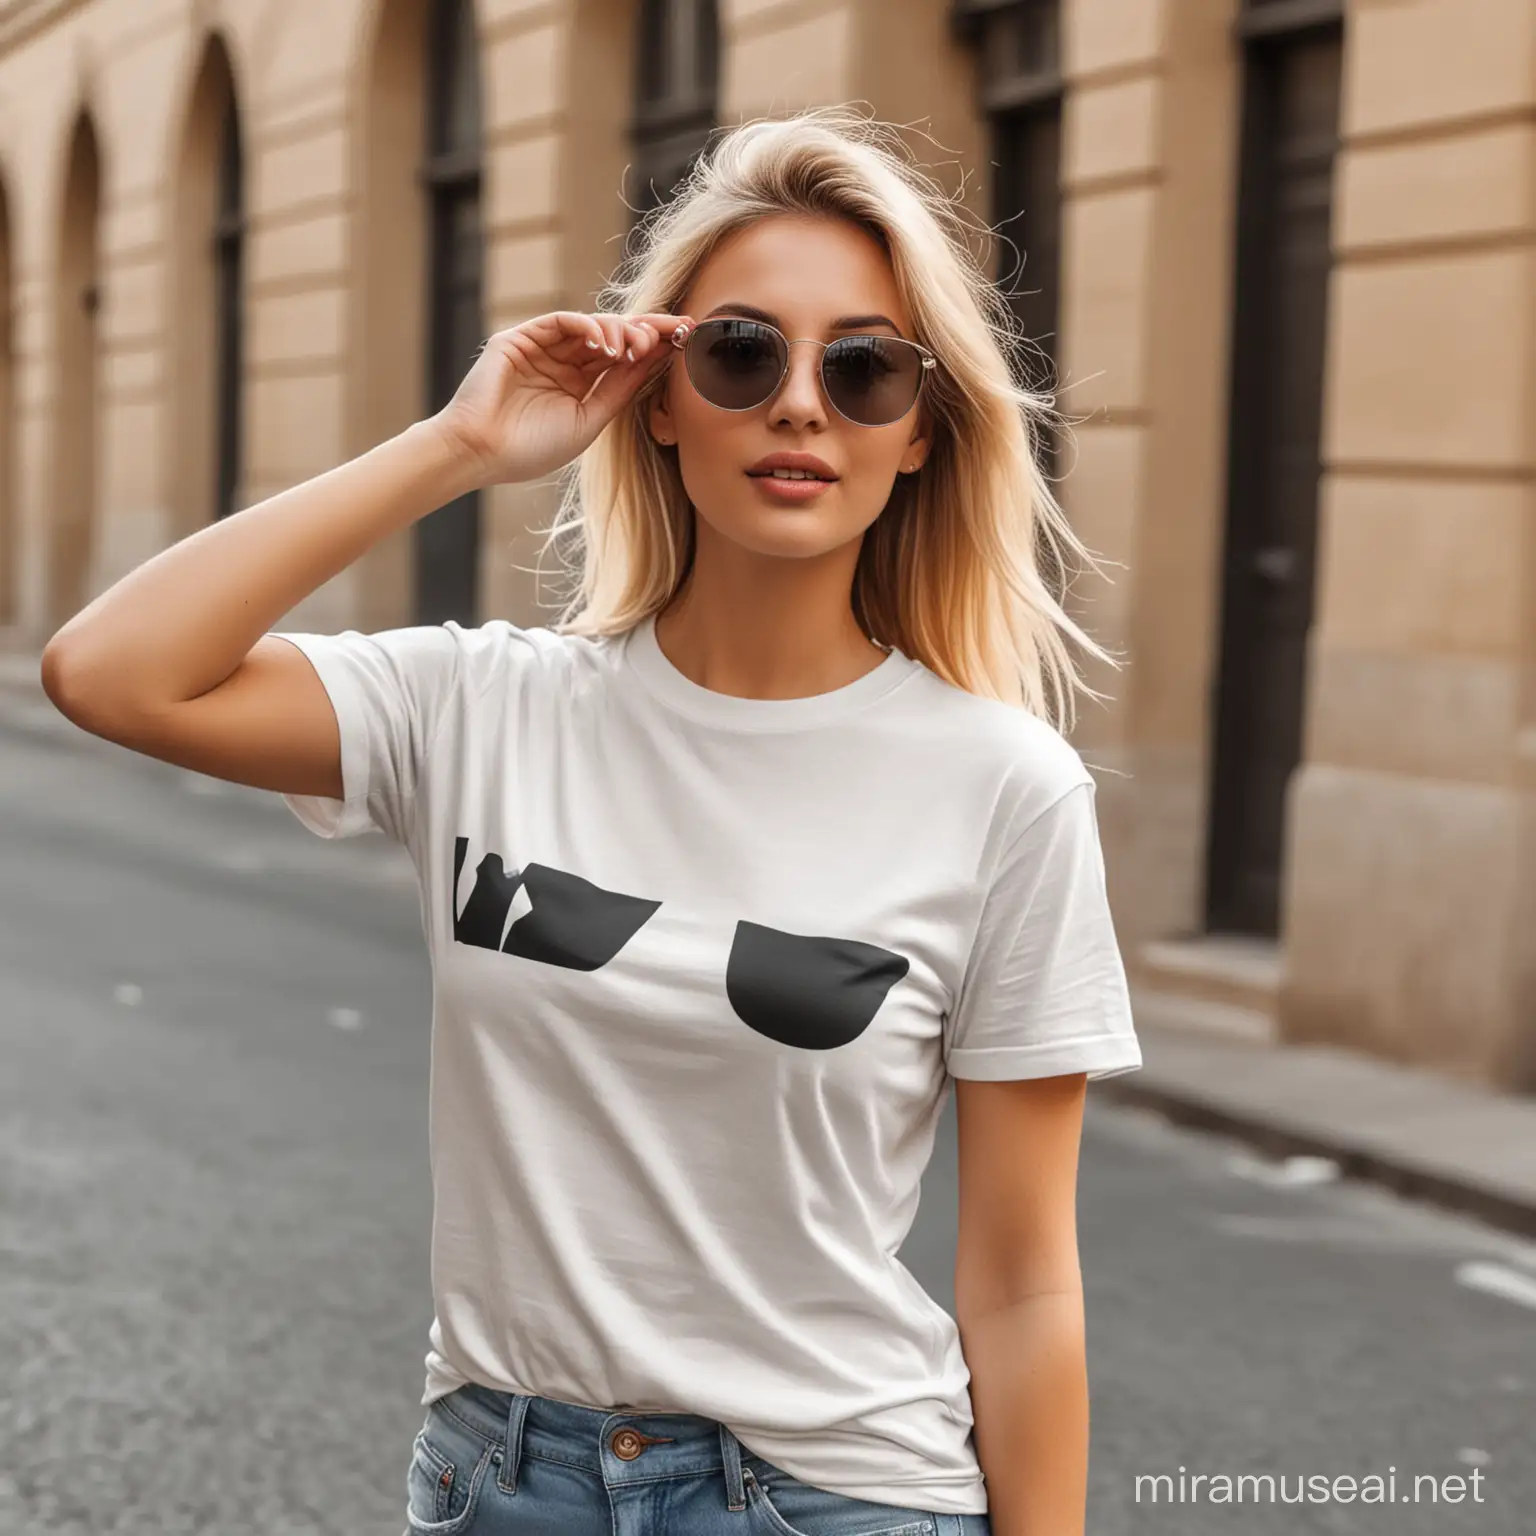 photo blonde with sunglasses pose blank tshirt street zoom